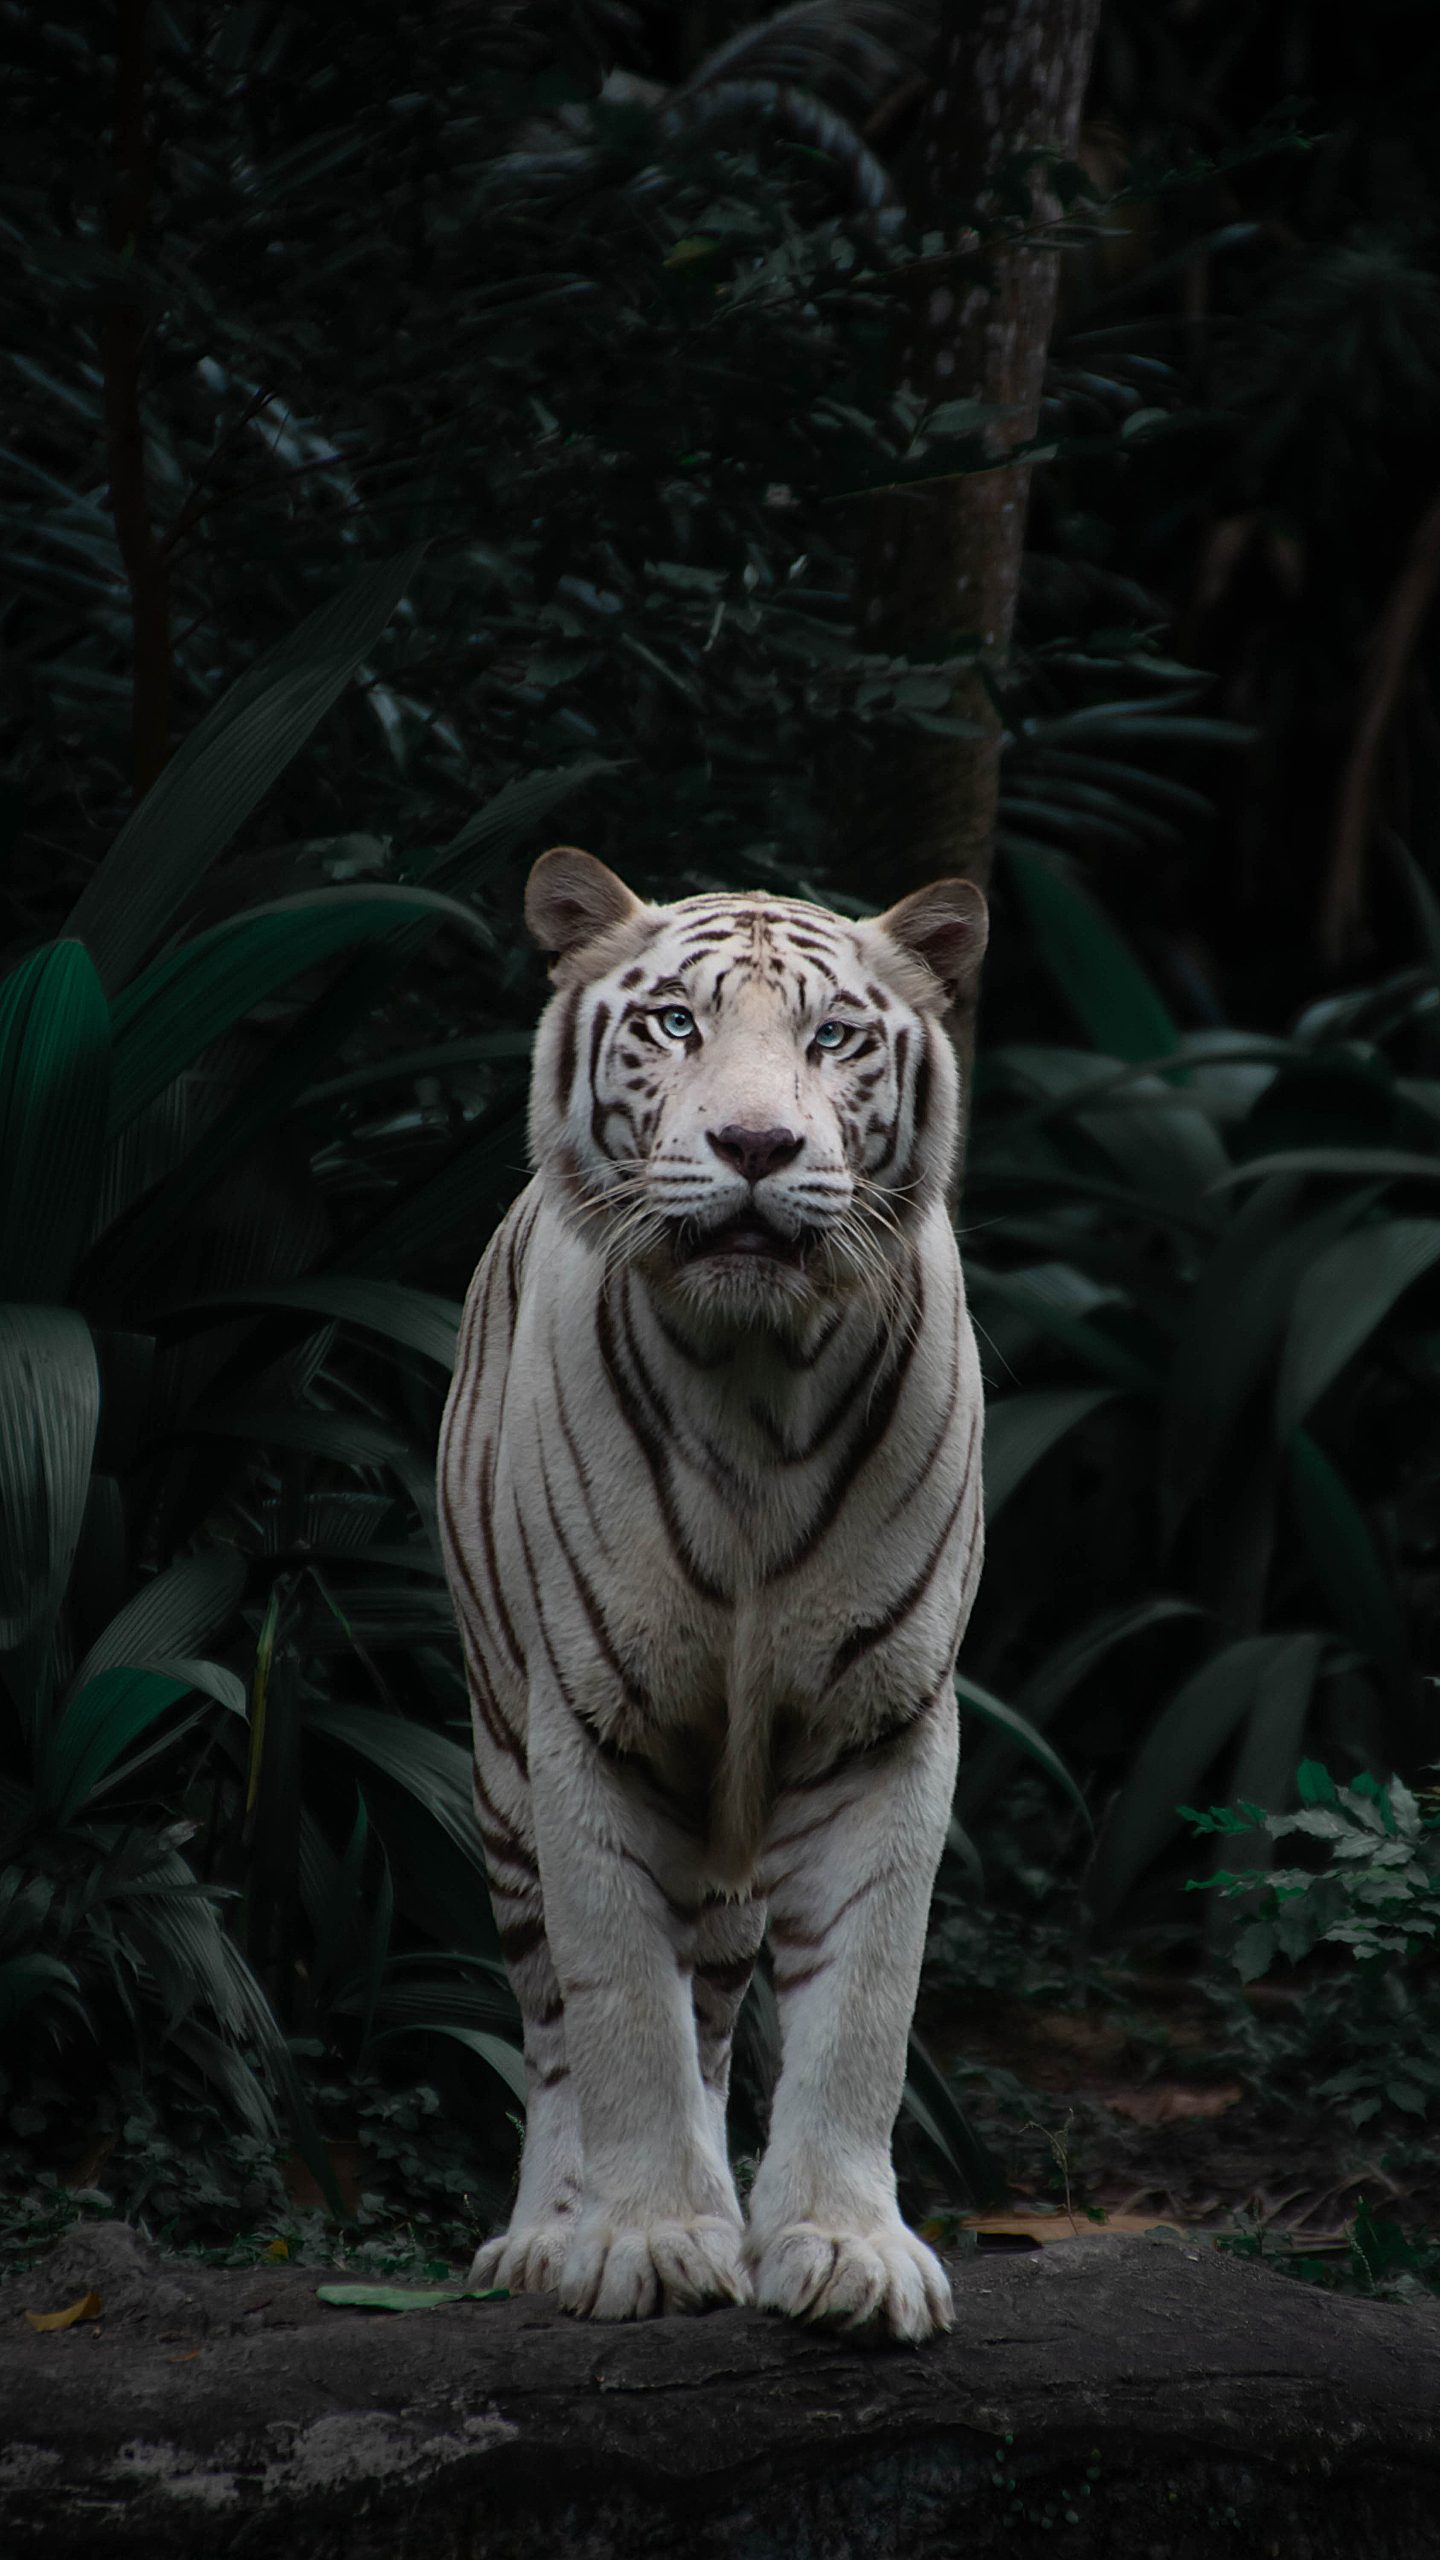 Sinagapore zoo tiger